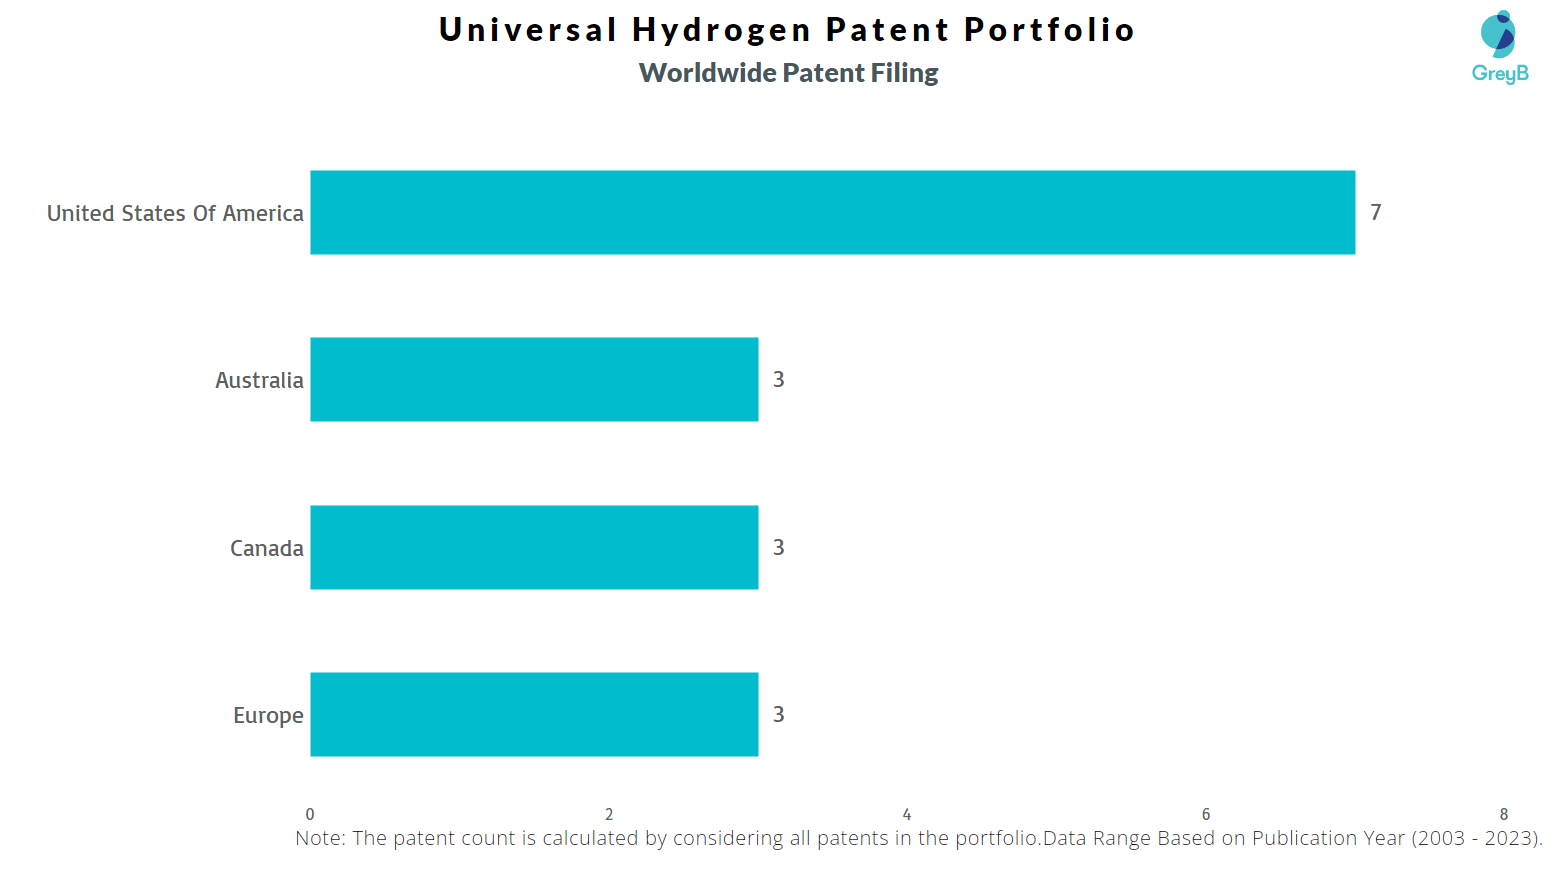 Universal Hydrogen Worldwide Patent Filing